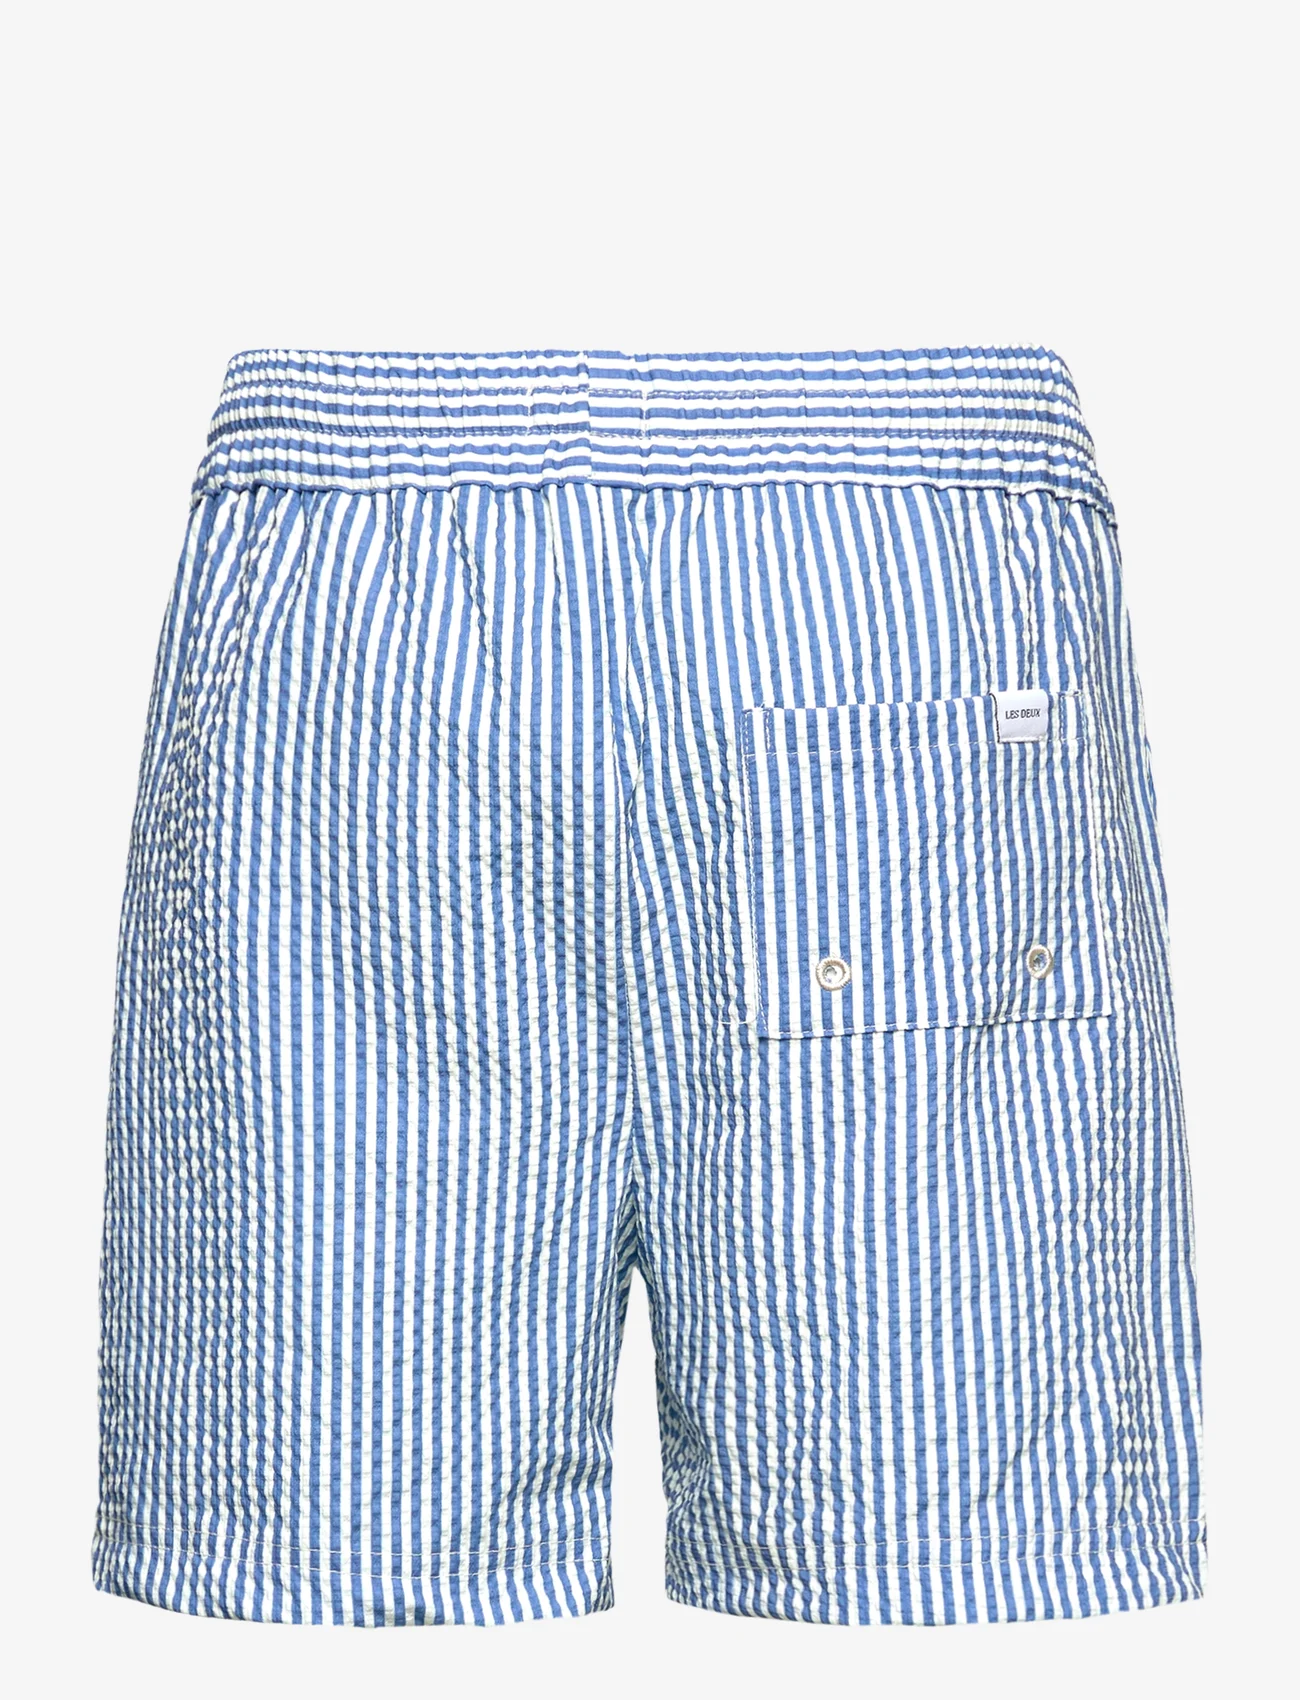 Les Deux - Stan Stripe Seersucker Swim Shorts - swimshorts - washed denim blue/light ivory - 1